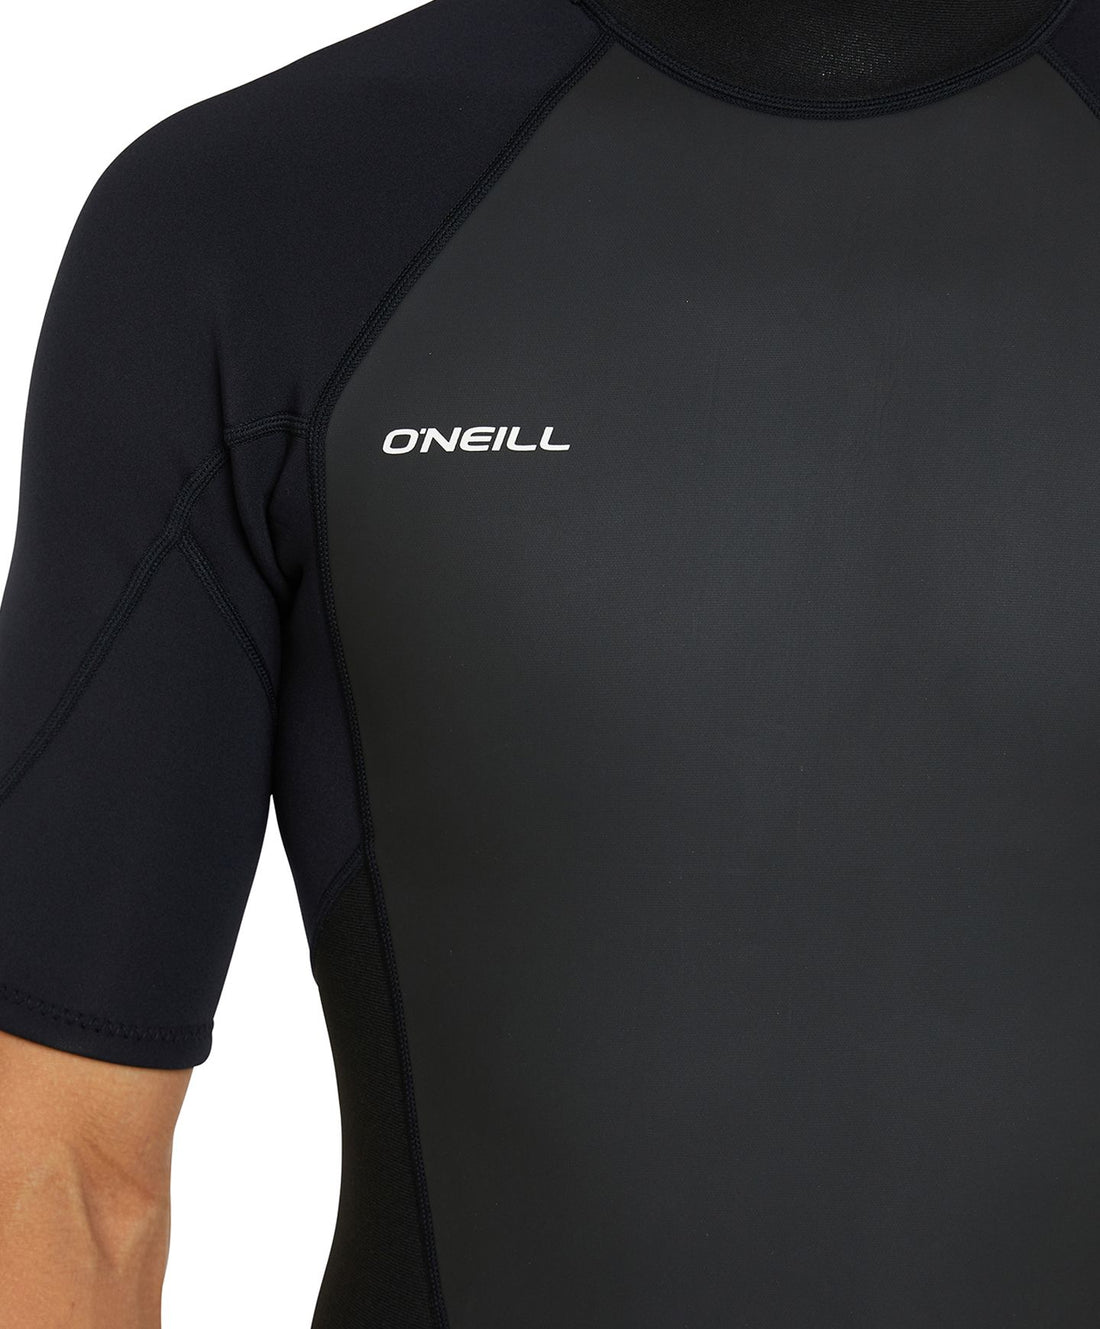 O'Neill Reactor II 2mm Back Zip Spring Suit